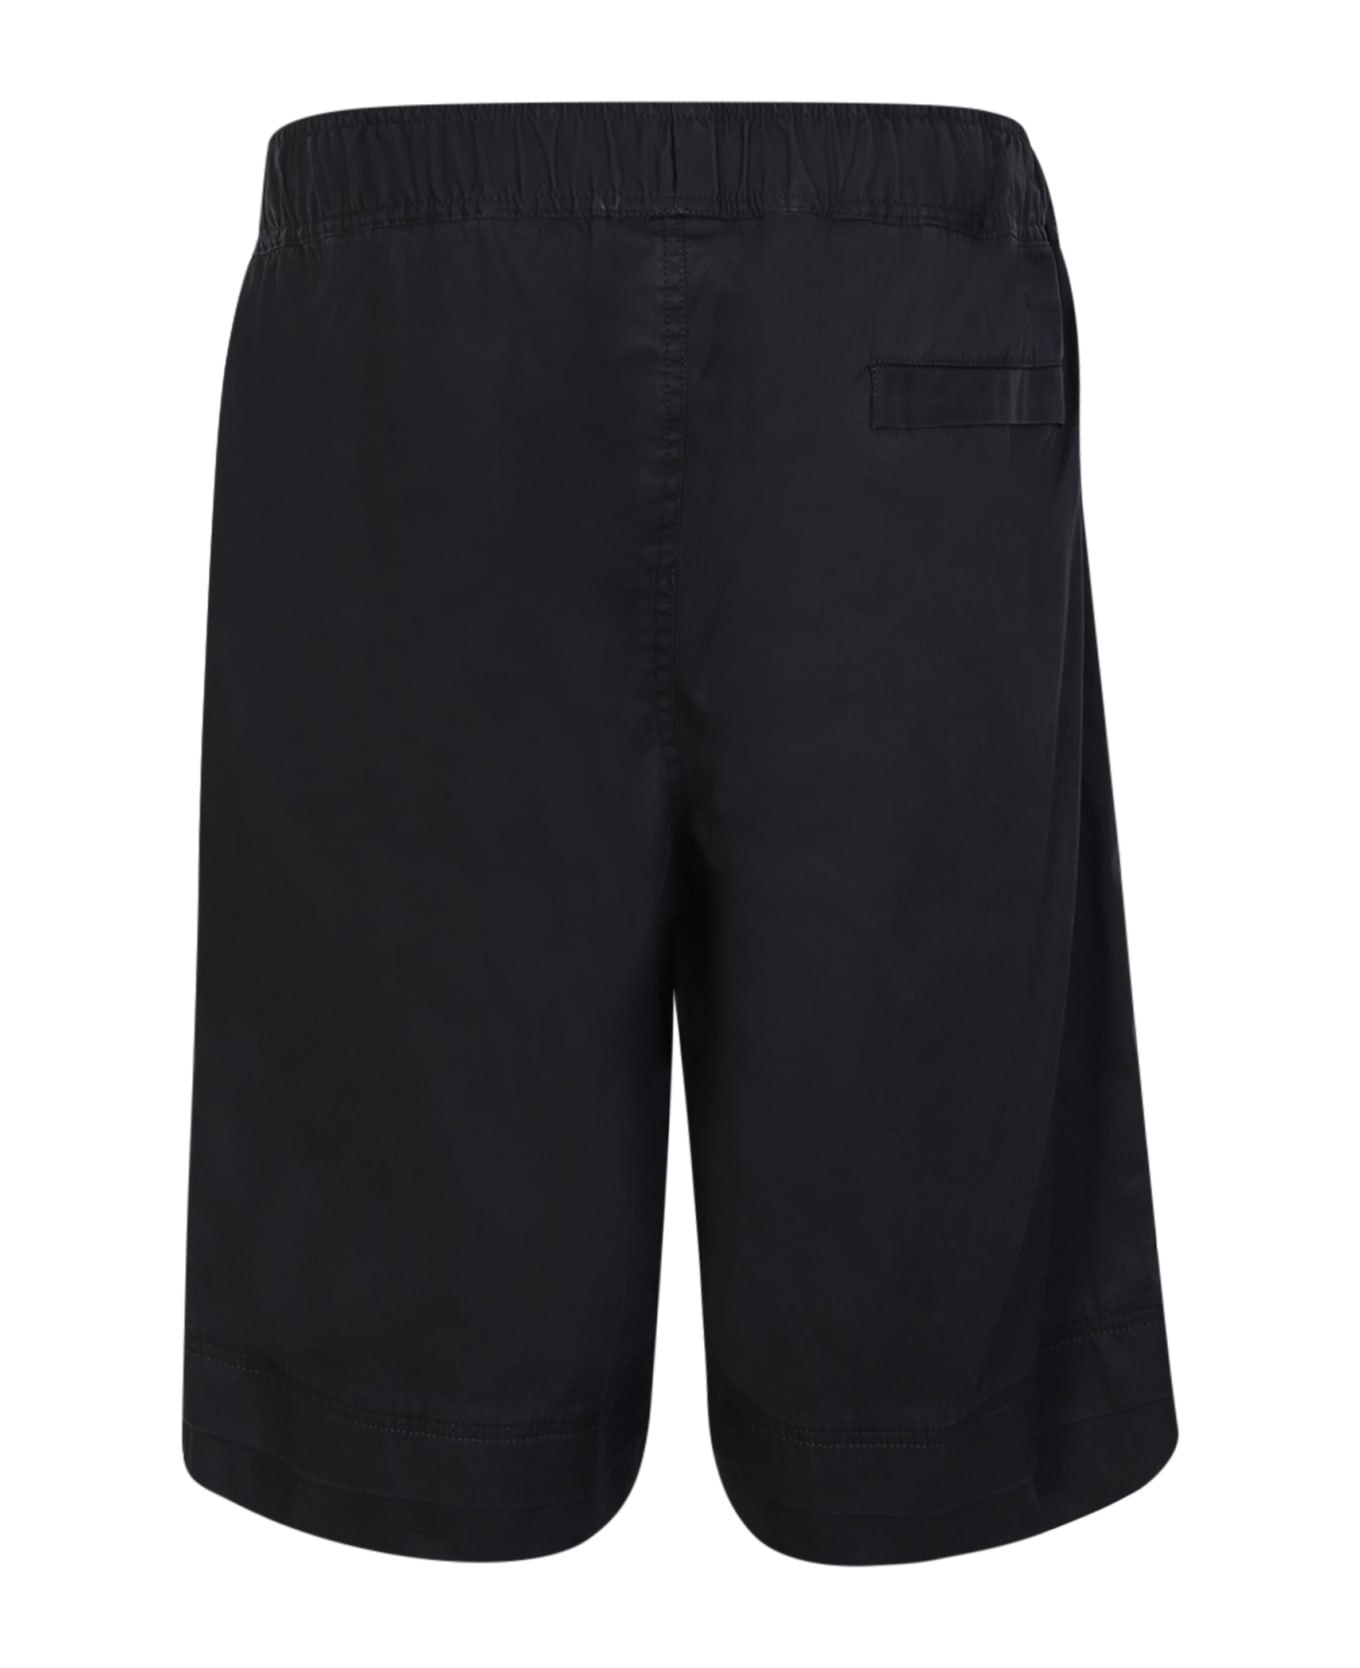 44 Label Group Embossed-logo Shorts - Black